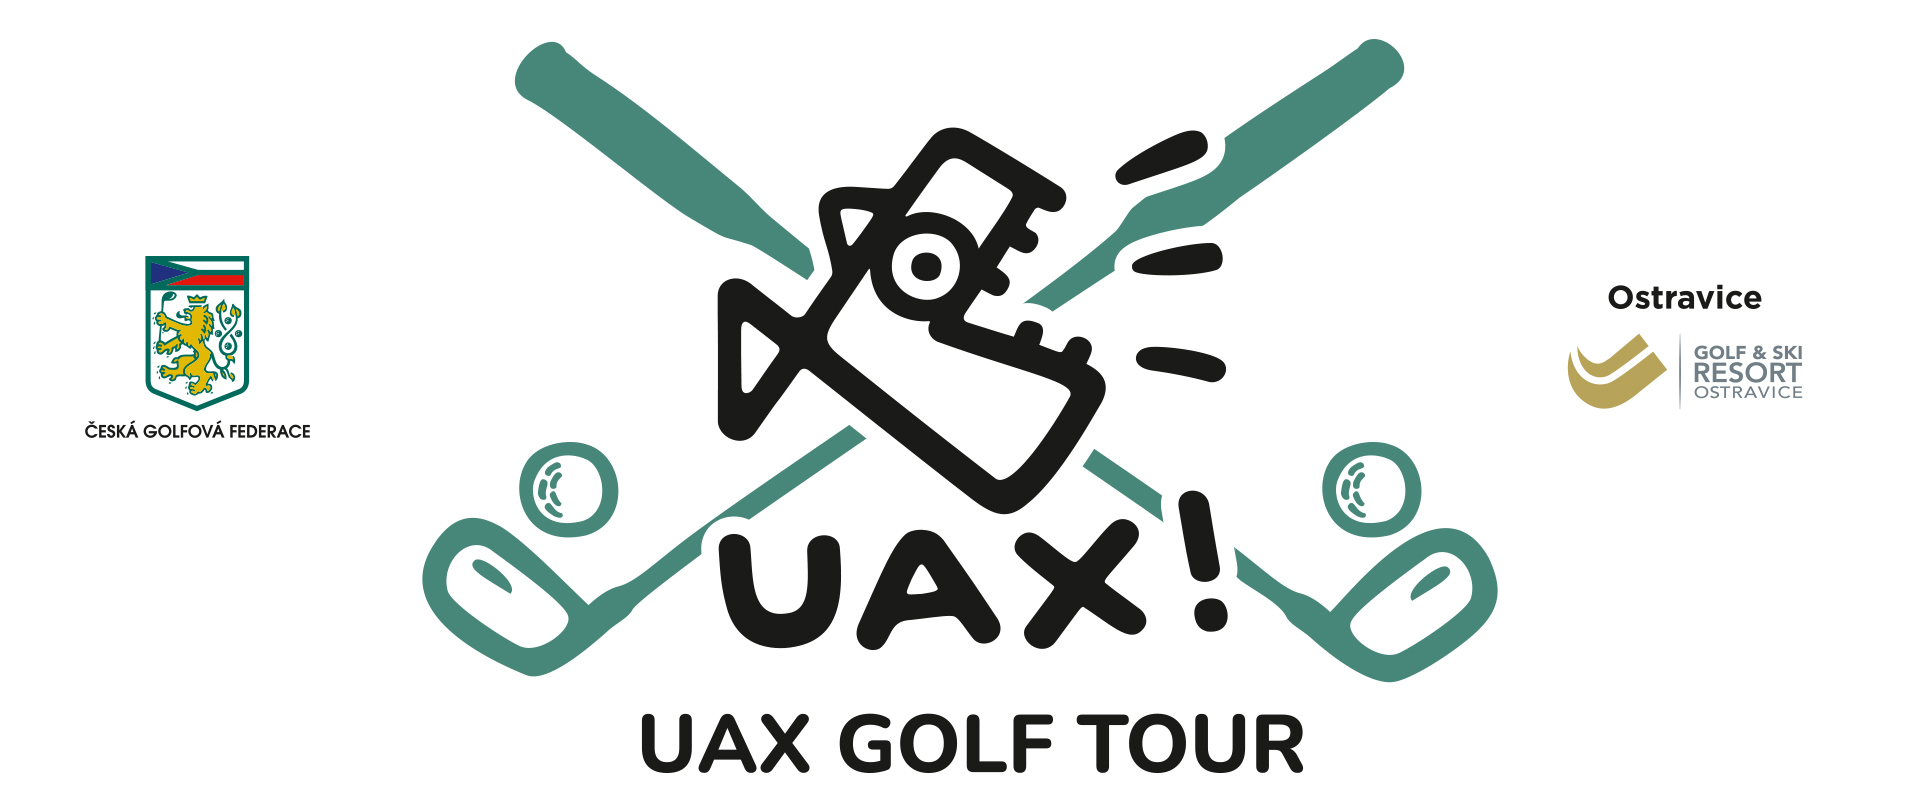 UAX Golf Tour Ostravice